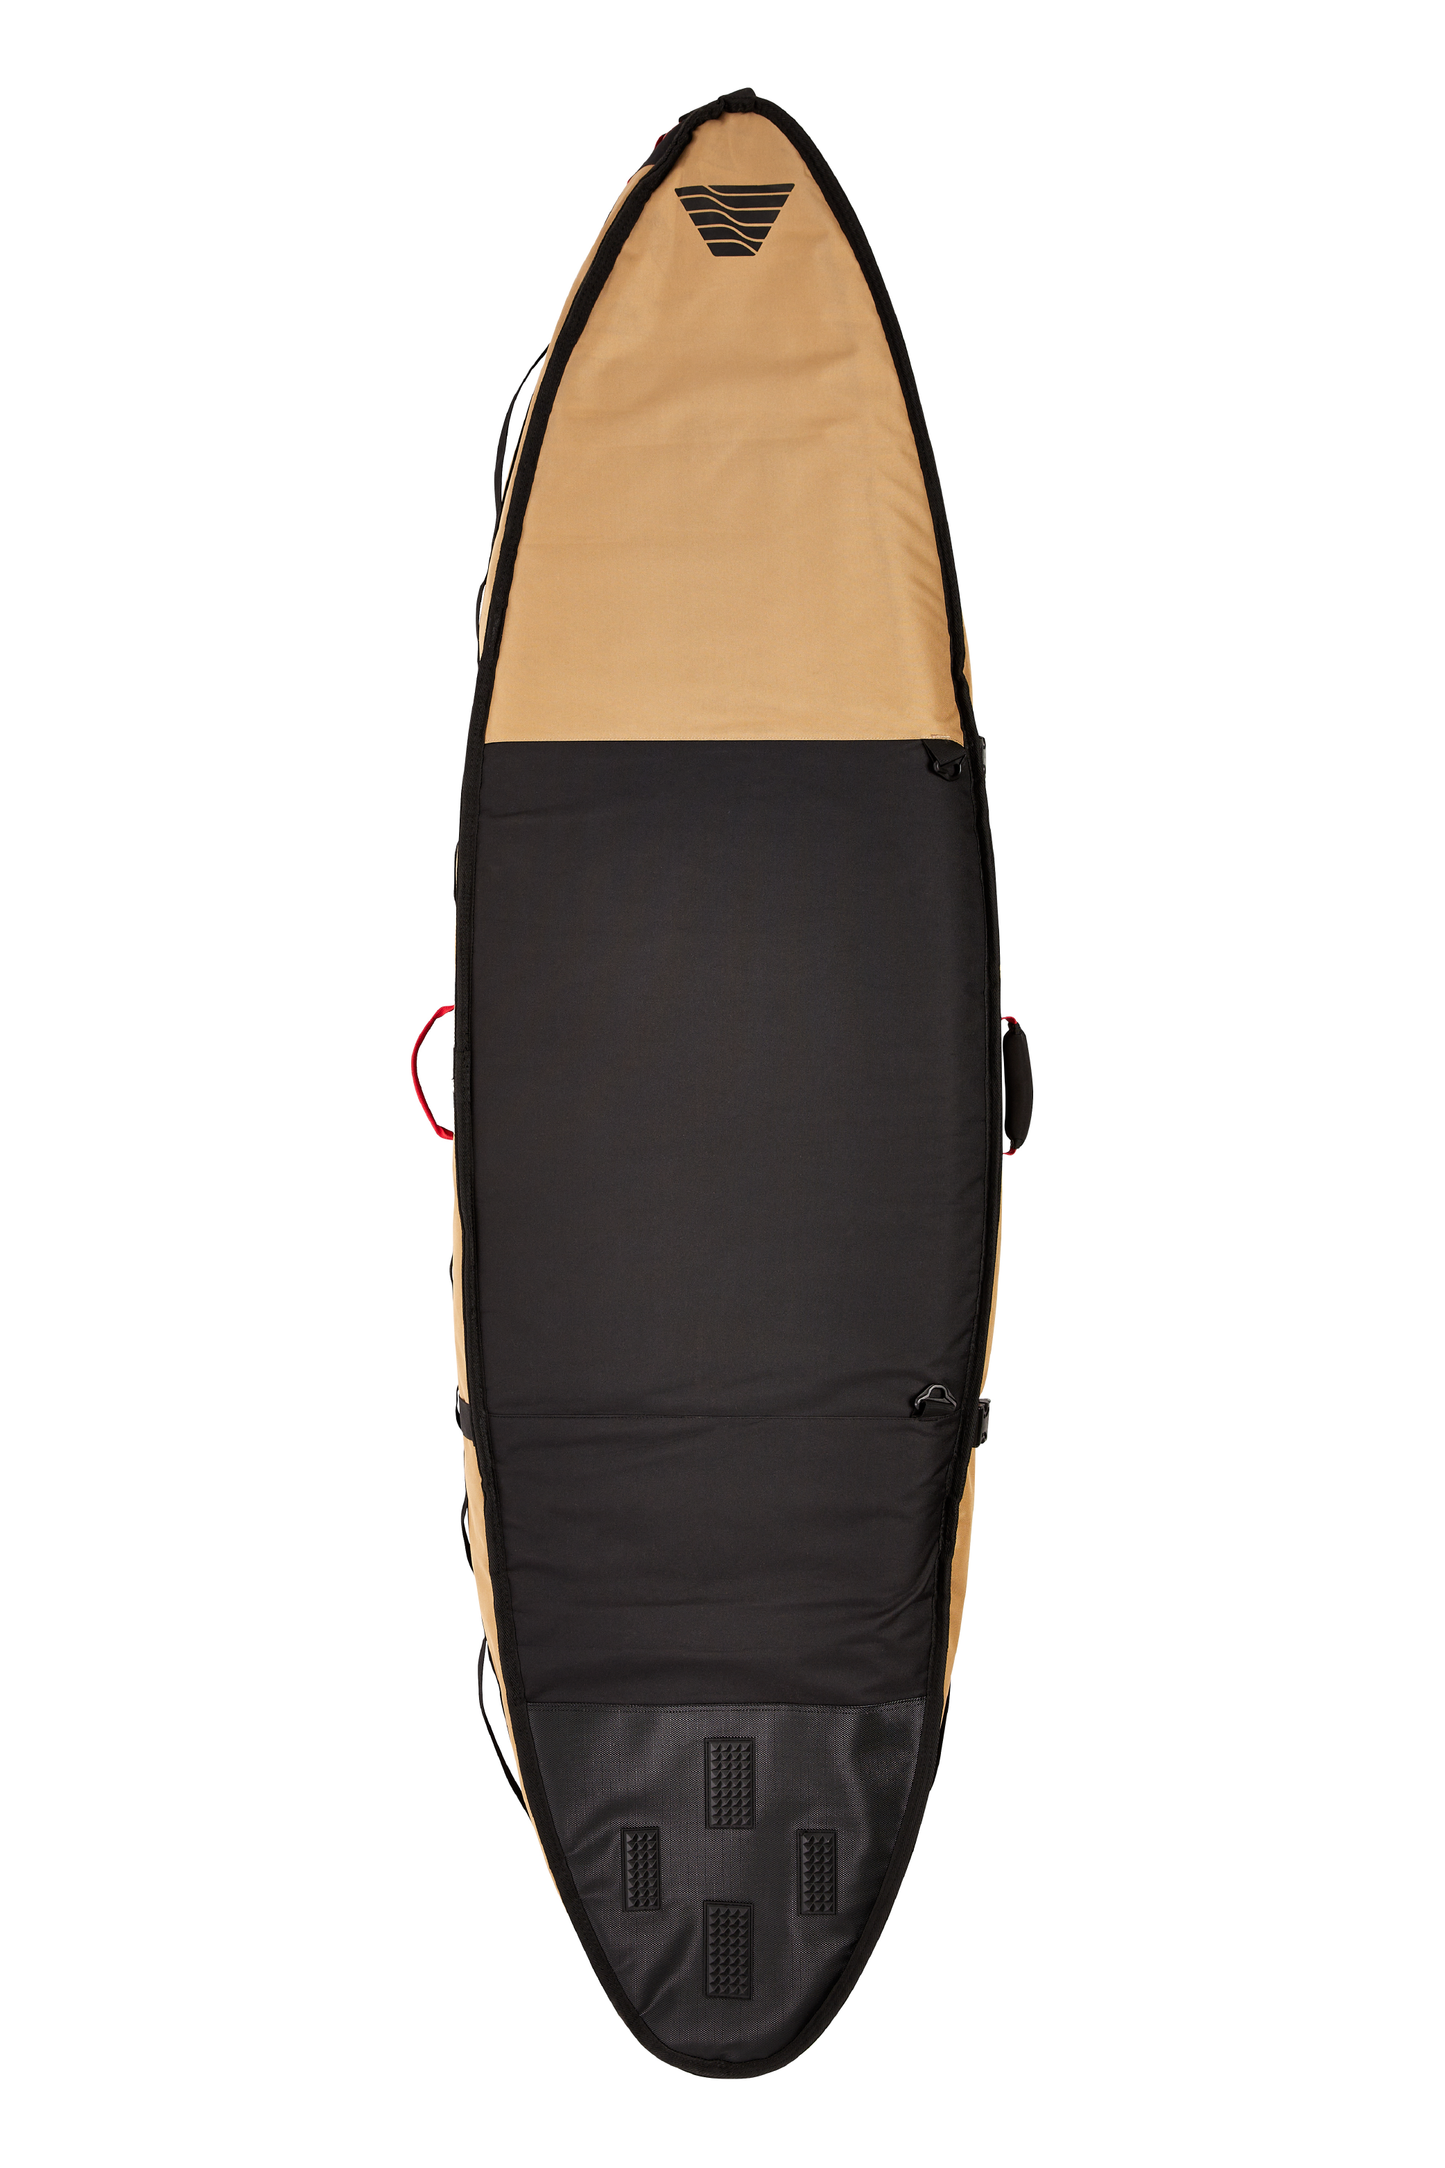 VEIA 4 Surfboard Travel Bag 